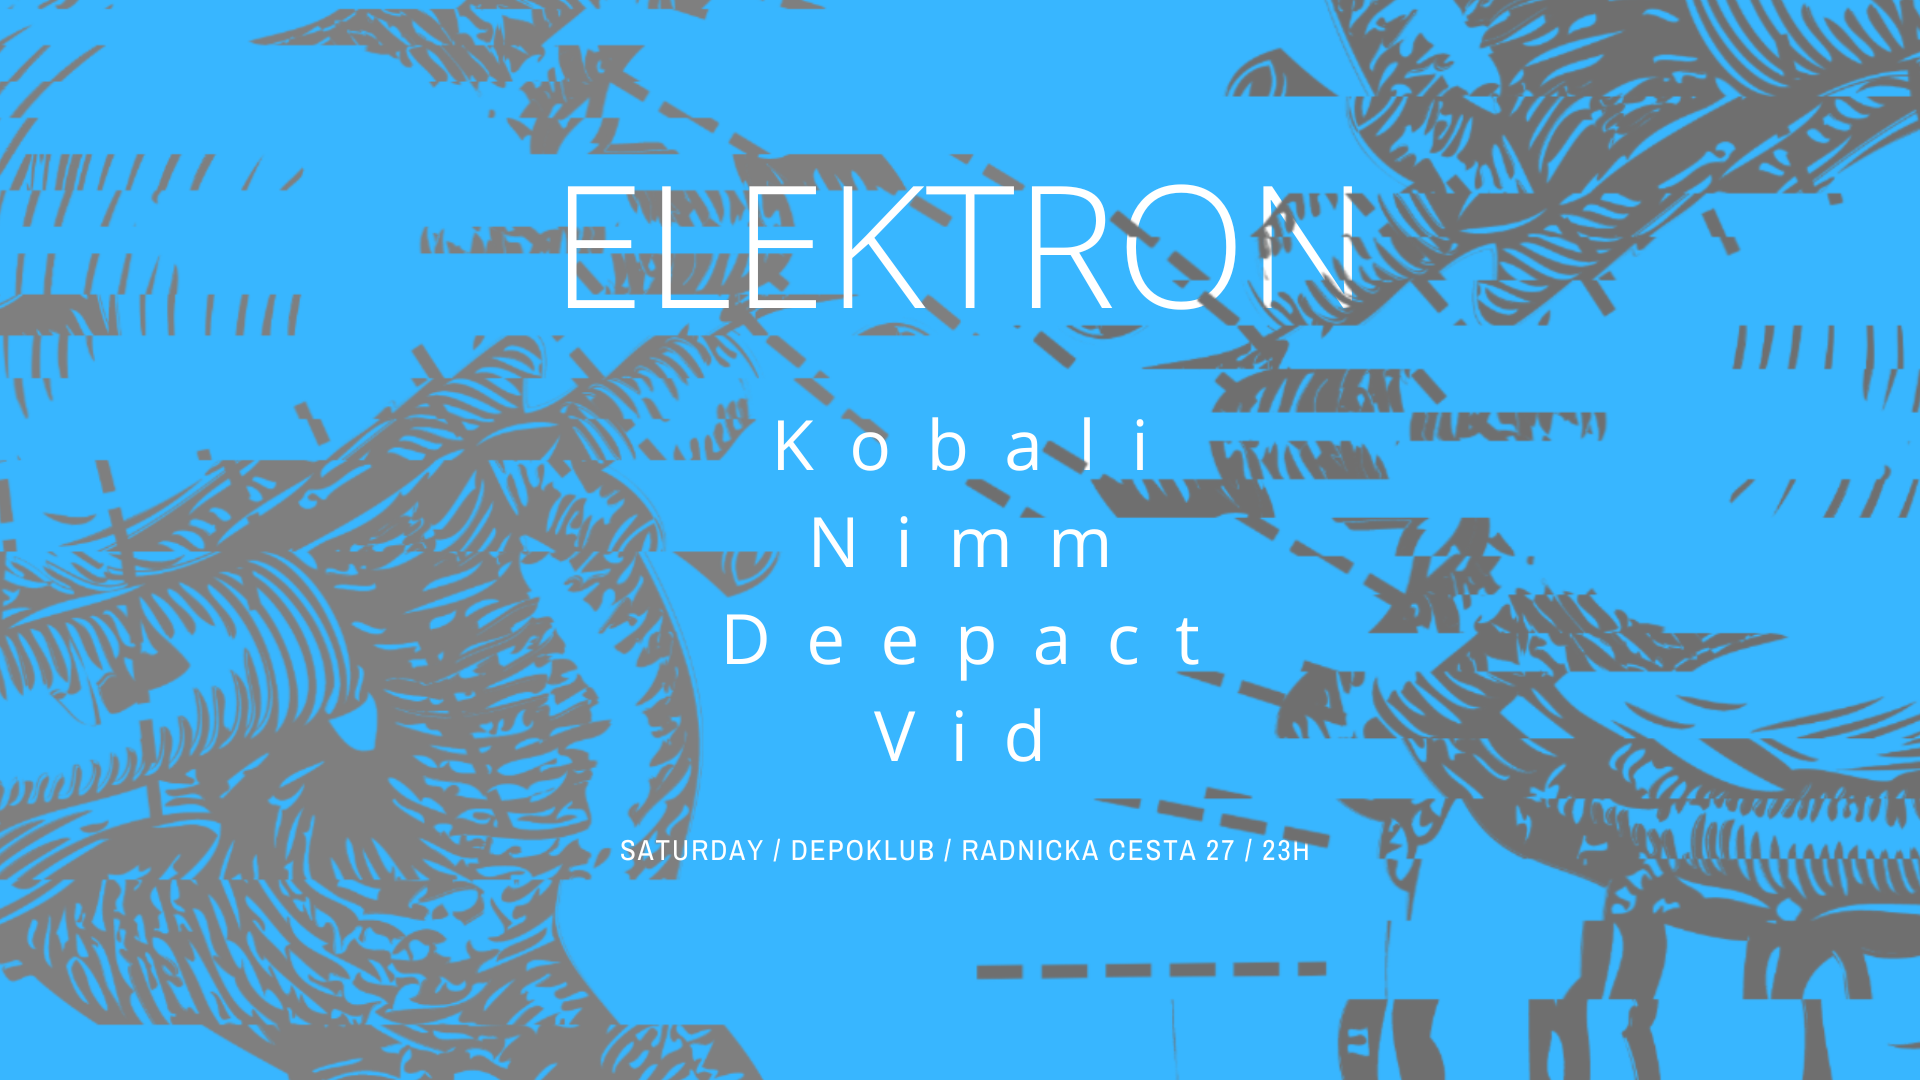 Elektron with Kobali x Nimm x Deepact x Vid - フライヤー表